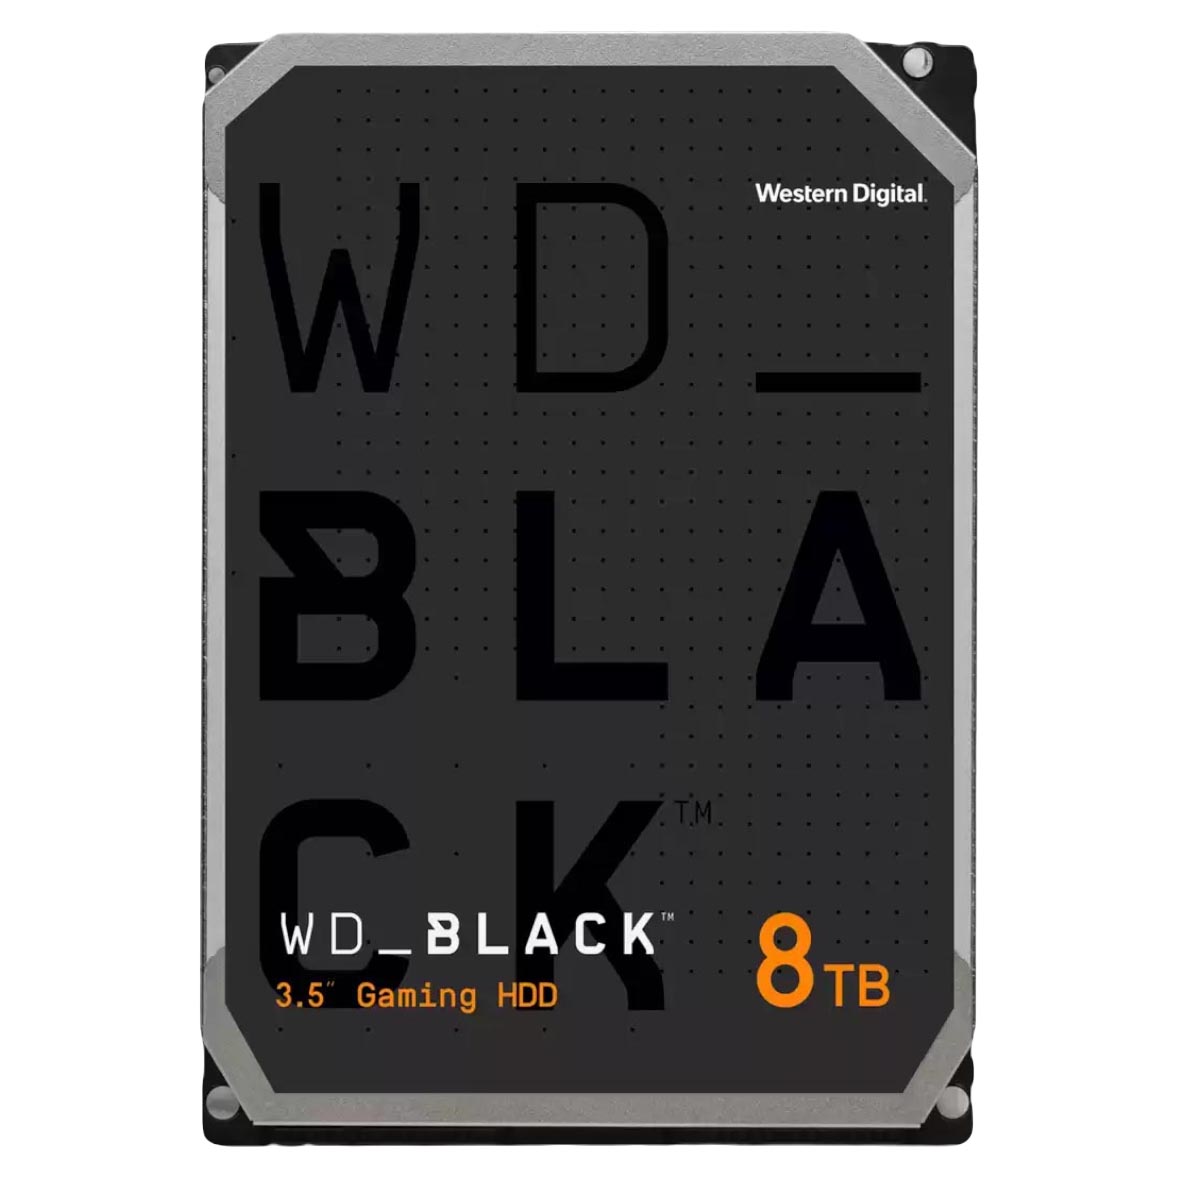 цена Внутренний жесткий диск Western Digital WD Black Gaming, WD8002FZWX, 8 Тб